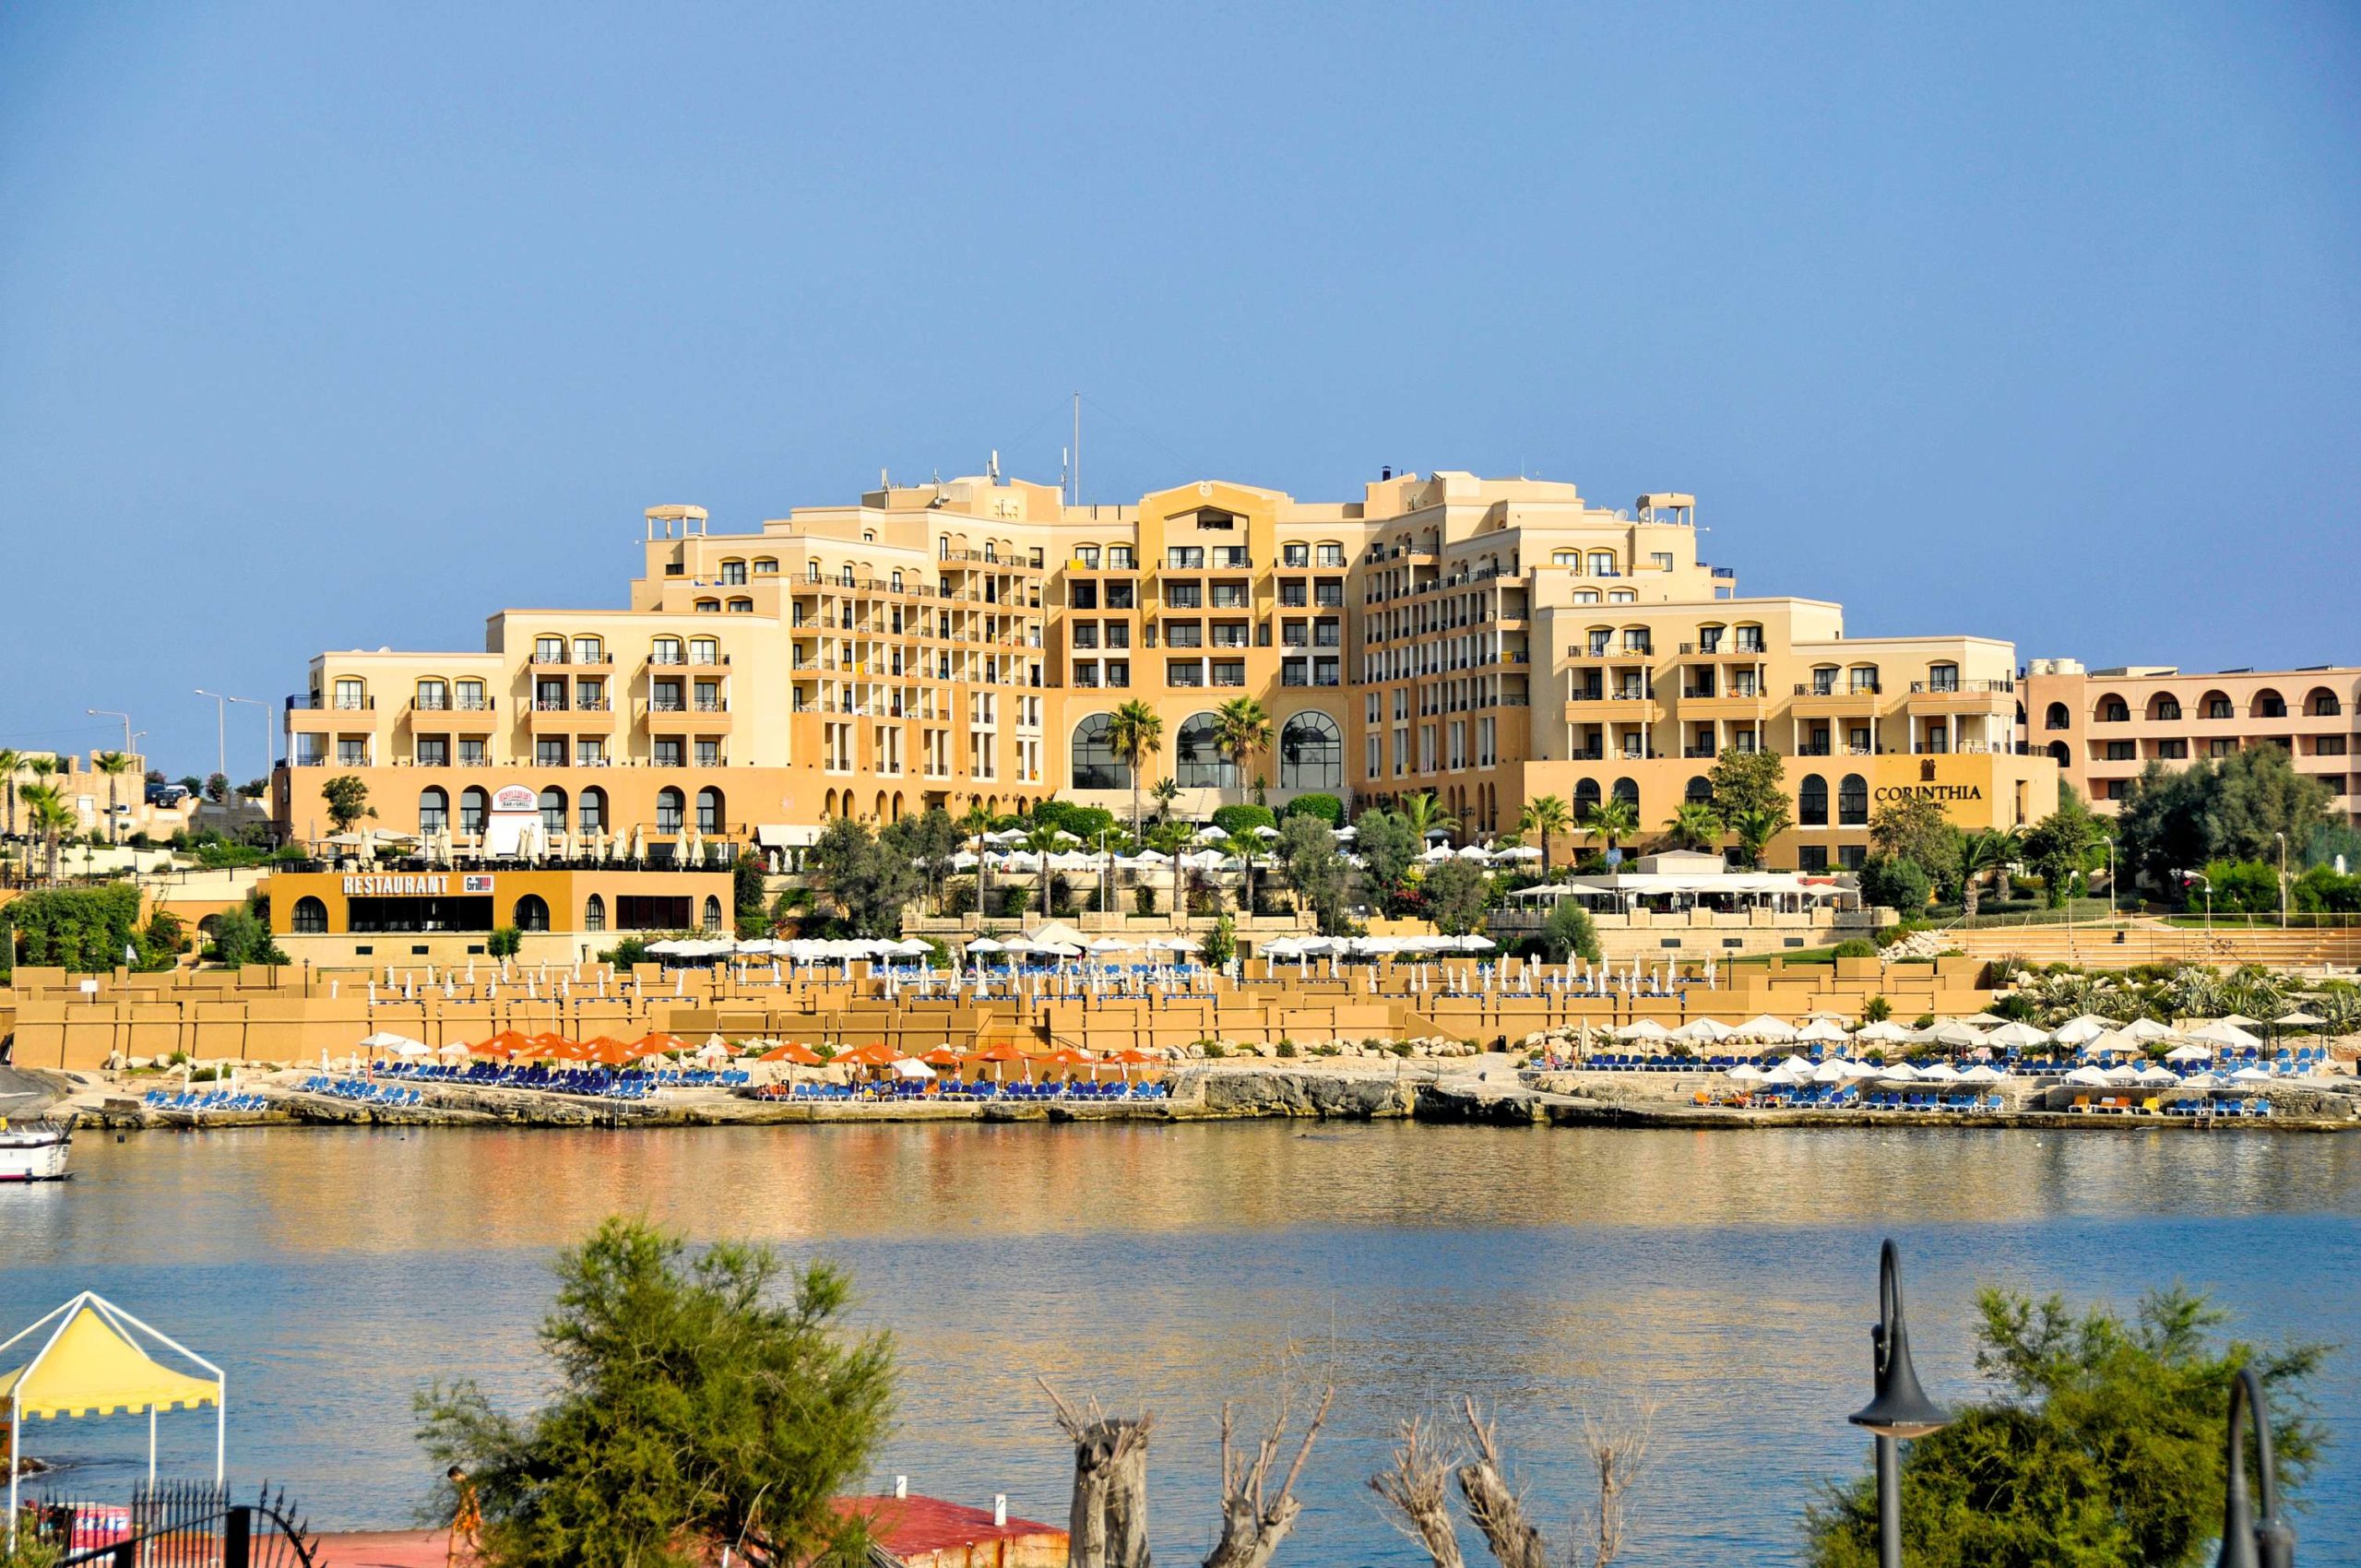 Corinthia Hotel St Georges Bay, St. Julian's, Malta